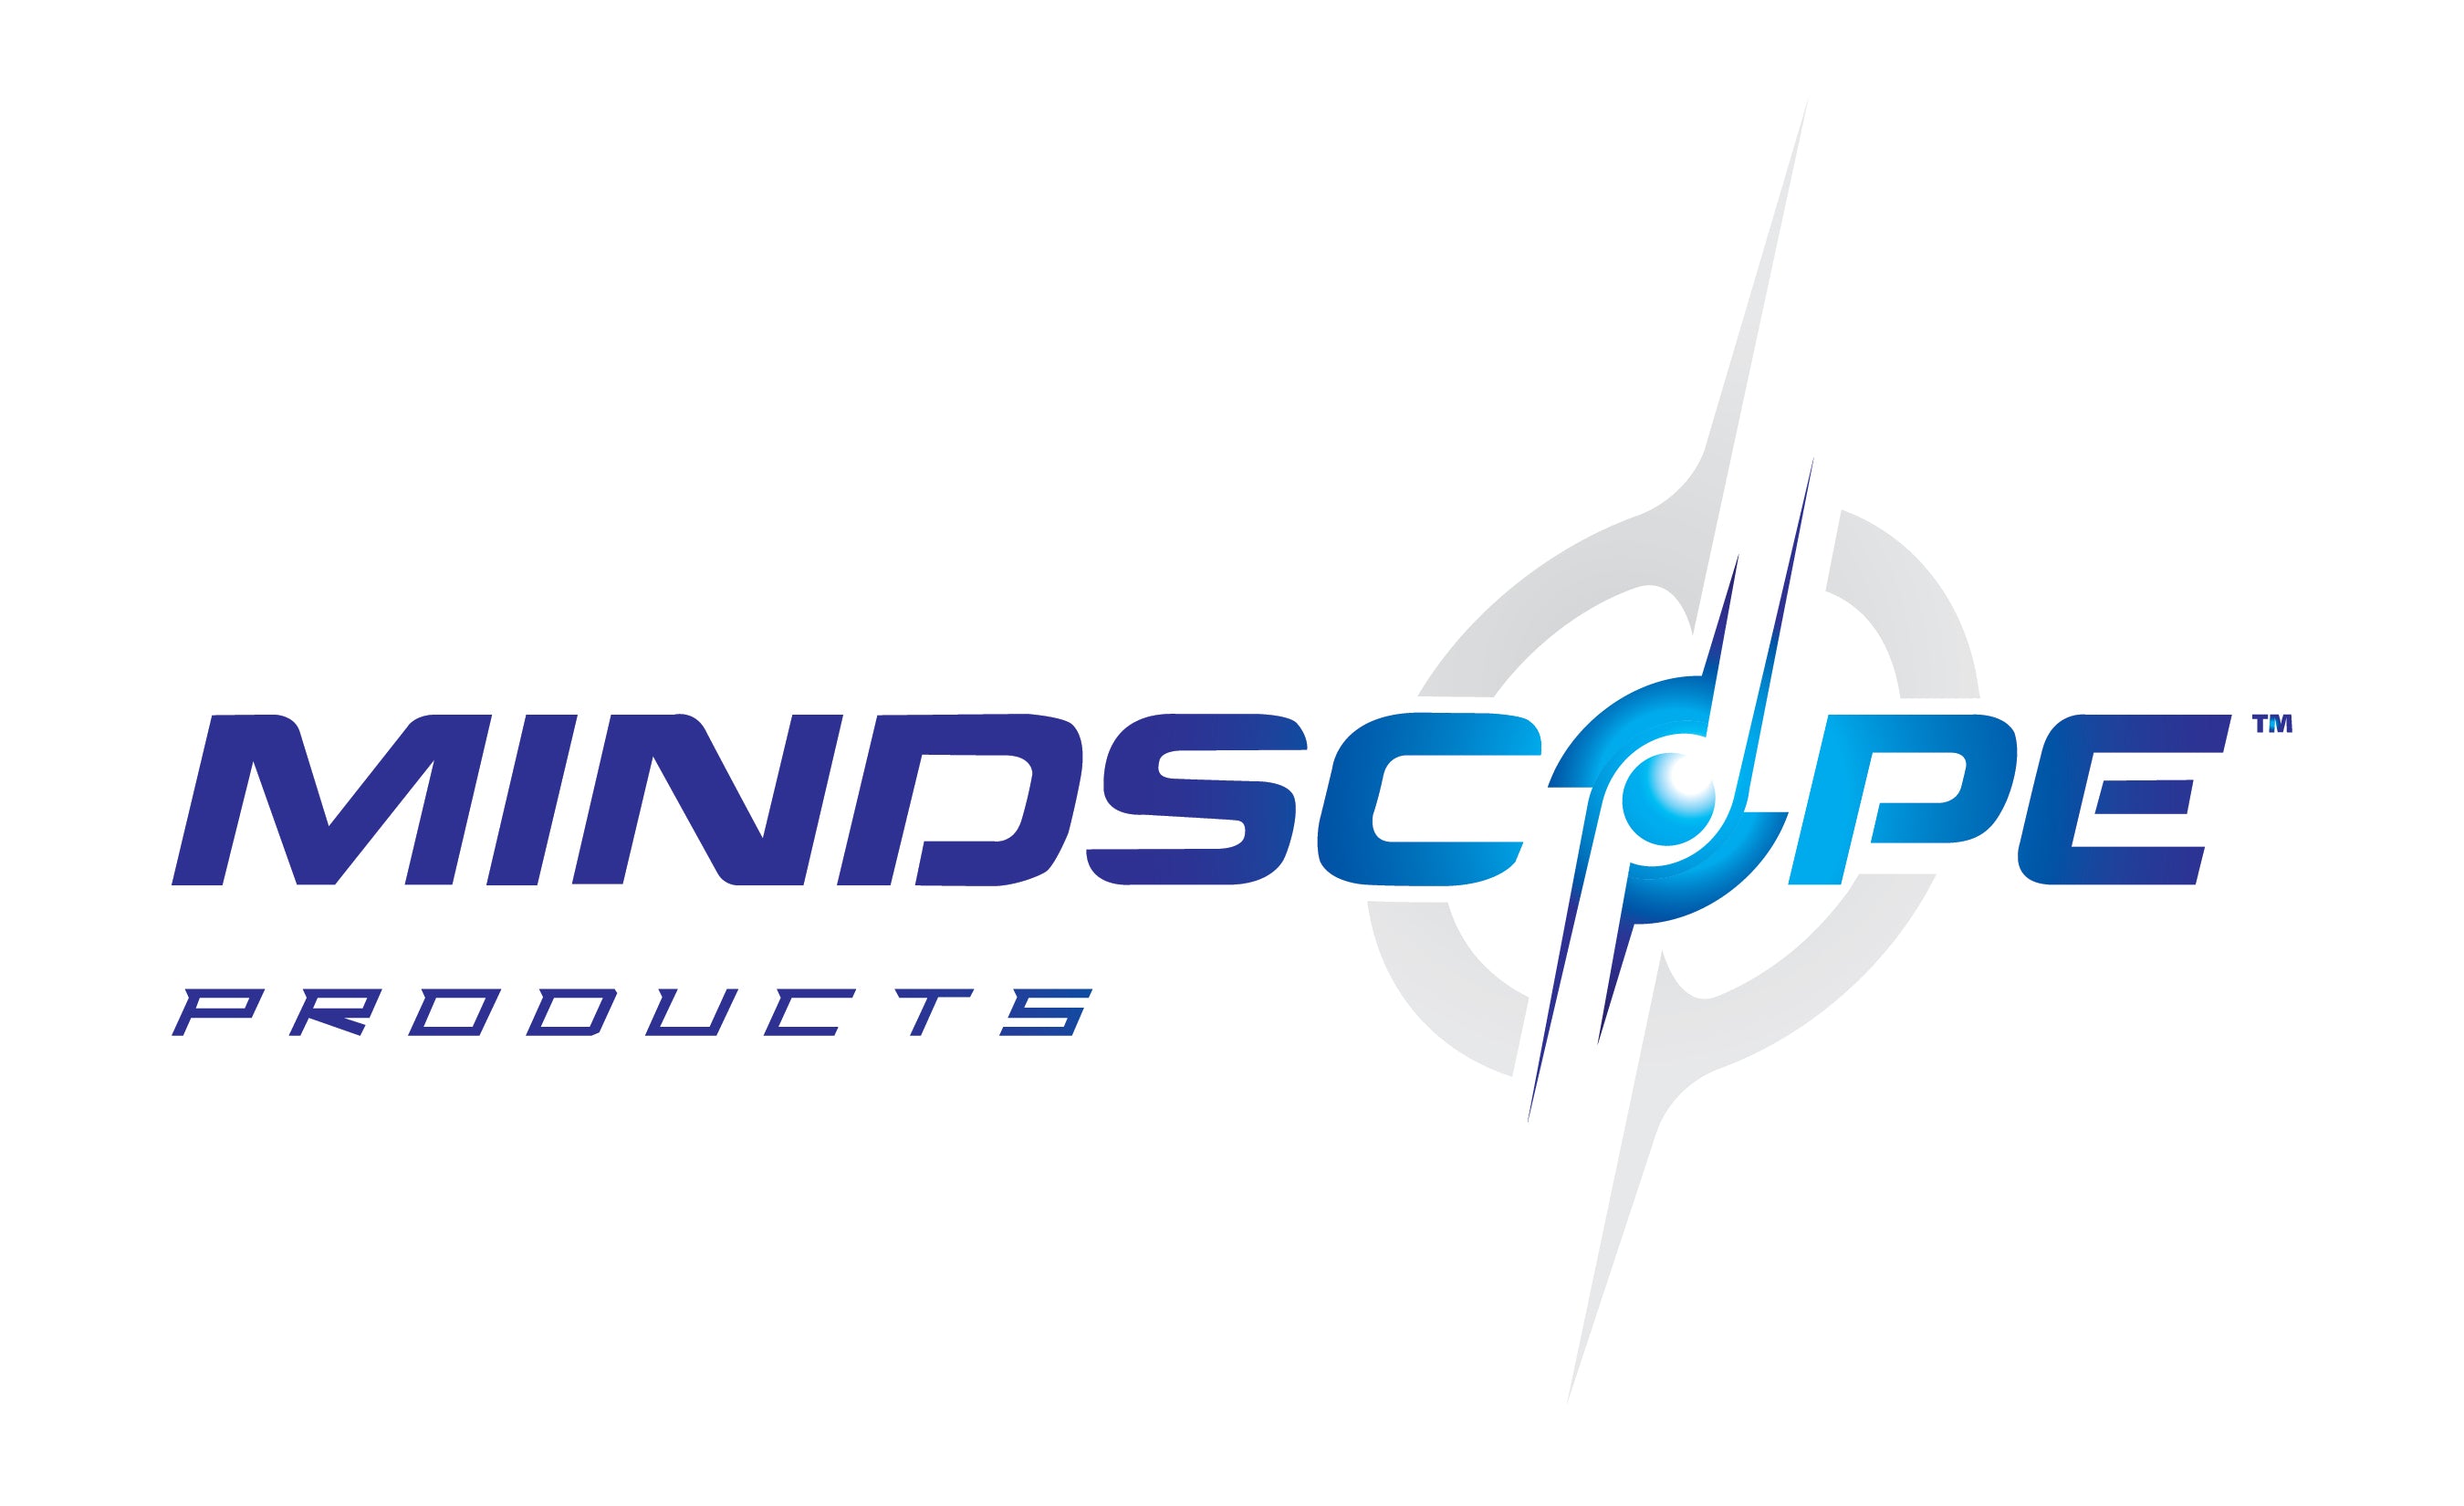 Mindscope Products